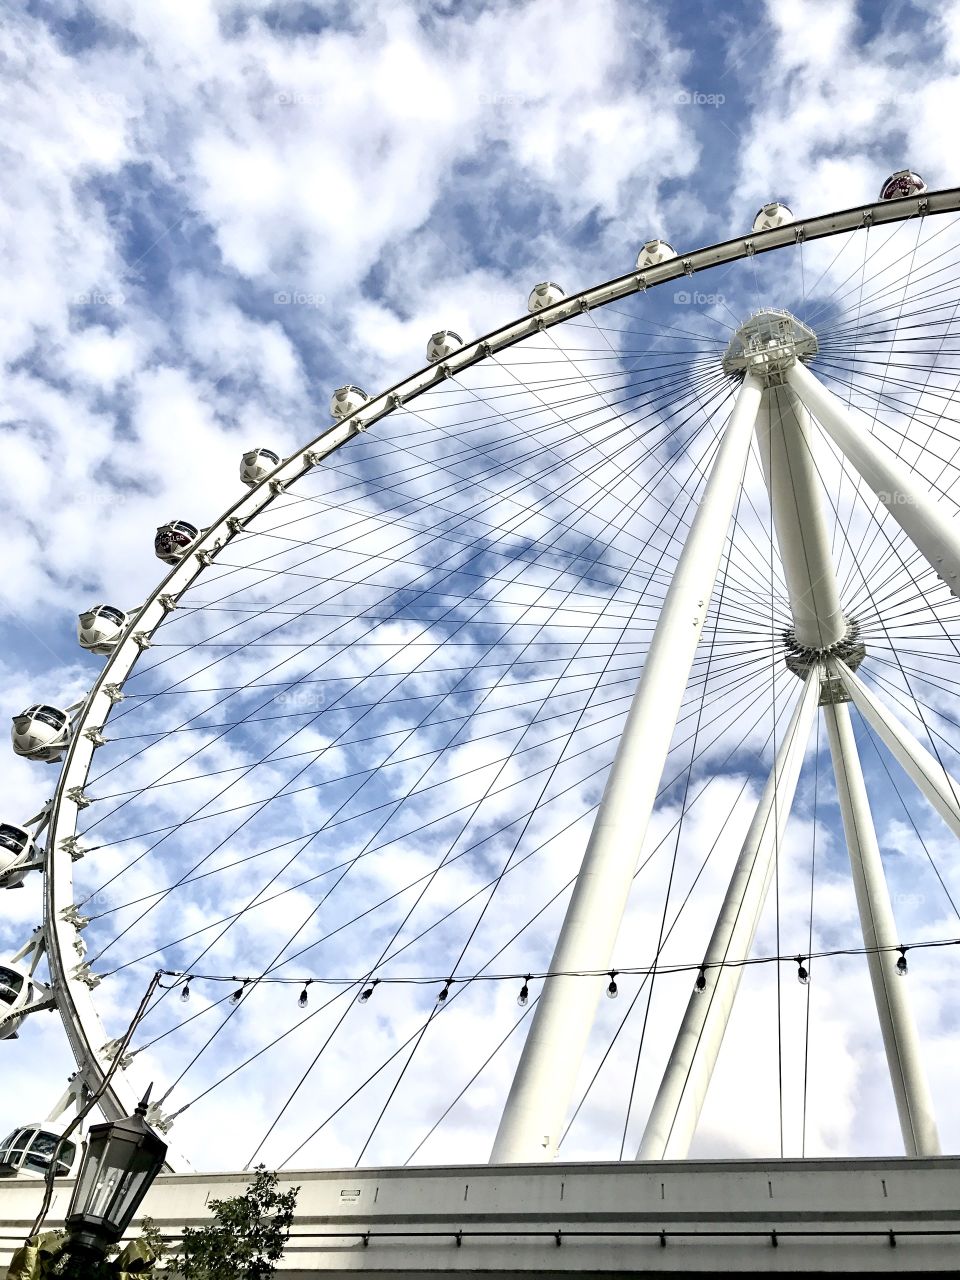 Giant Ferris Wheels